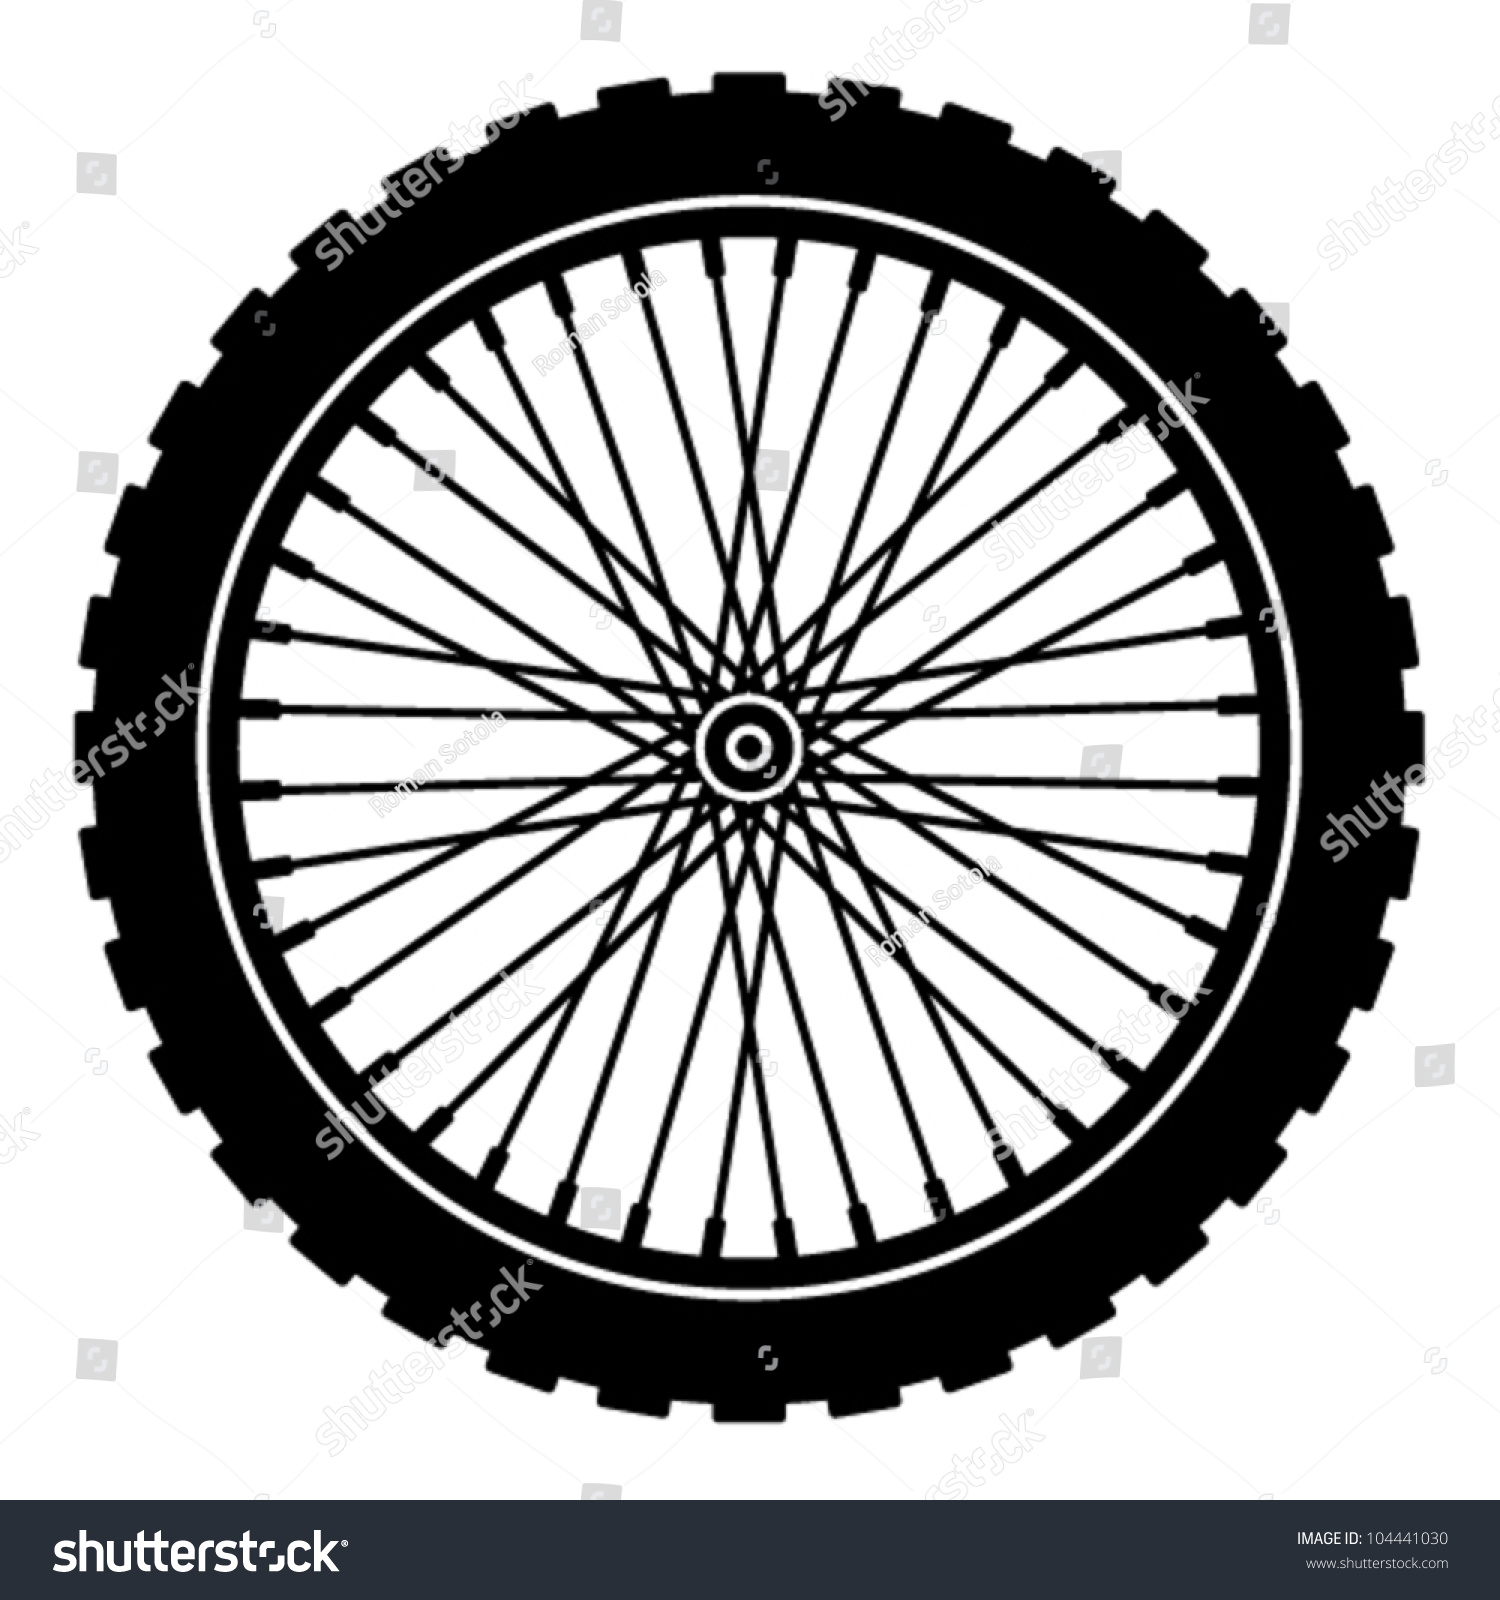 clipart bike wheel - photo #9